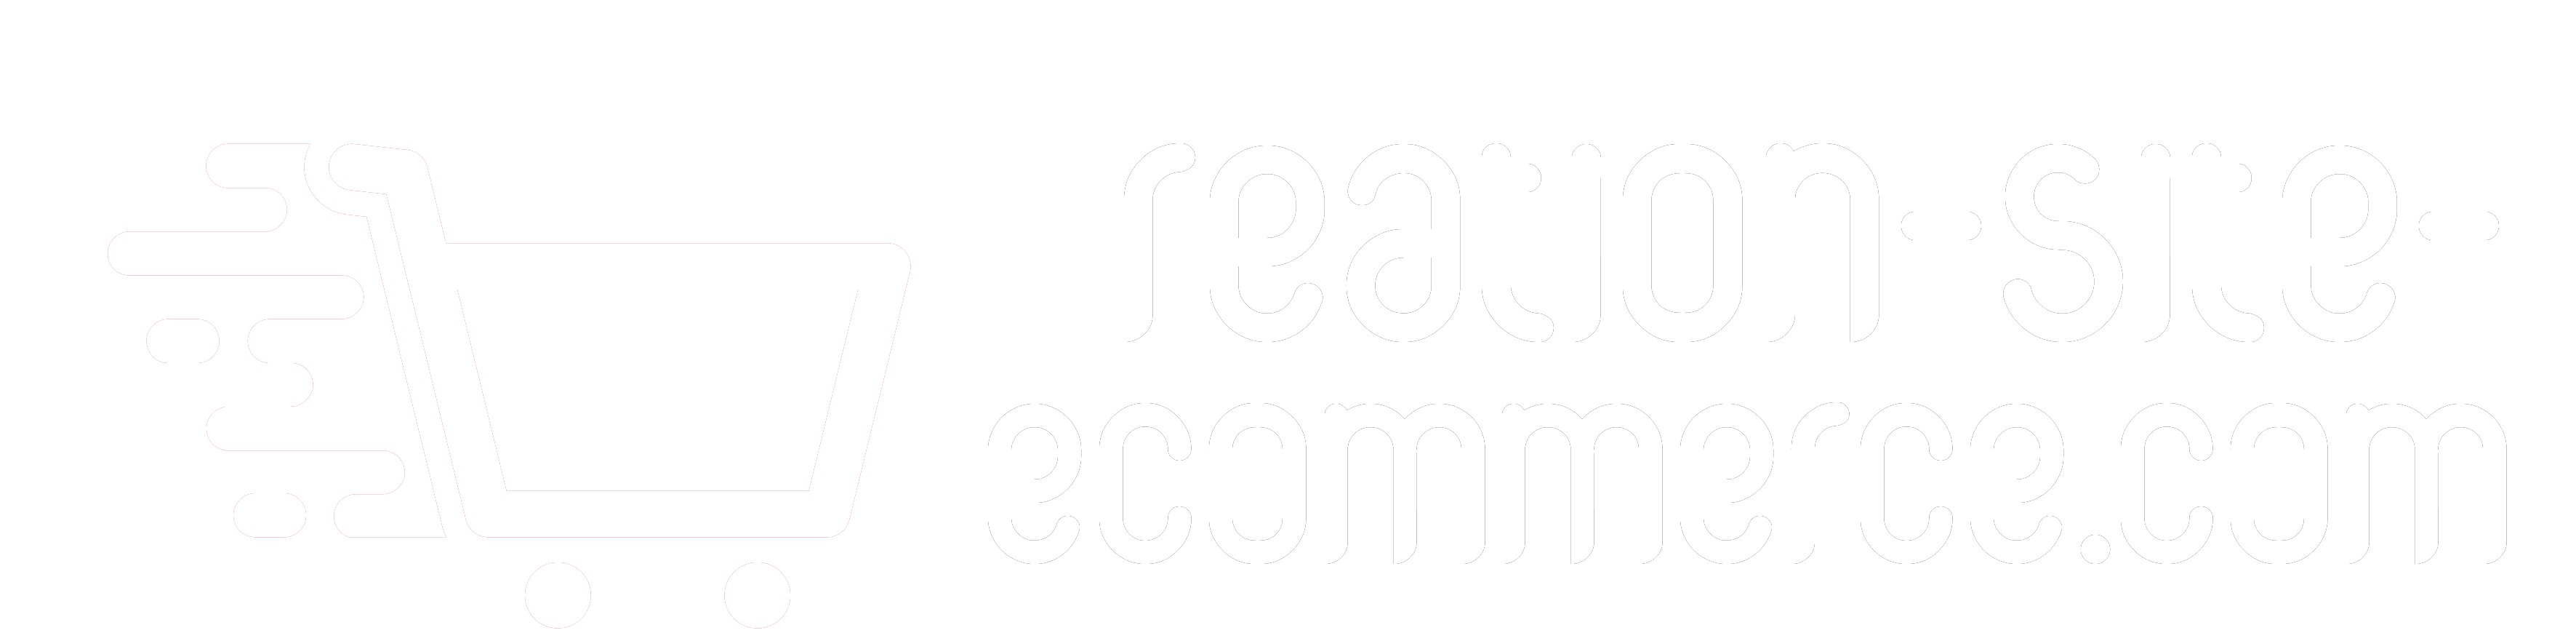 Creation-Site-Ecommerce.com